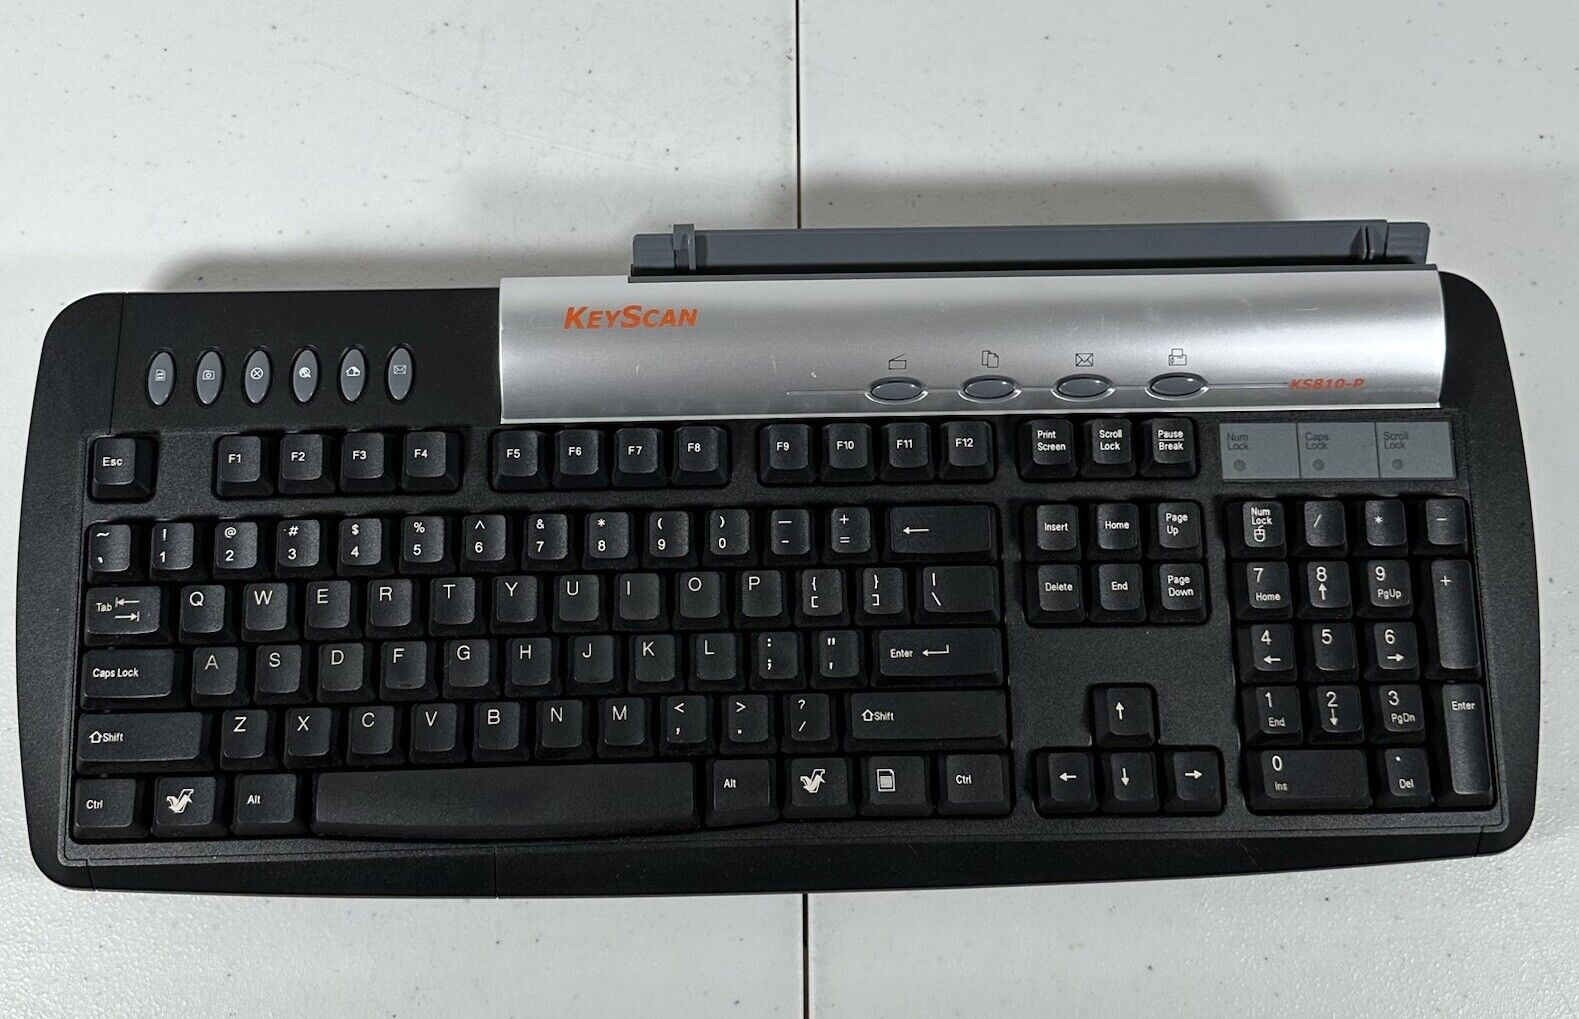 Keyscan KS810-P Keyboard Scanner USB Imaging Tested Works No Cables Included